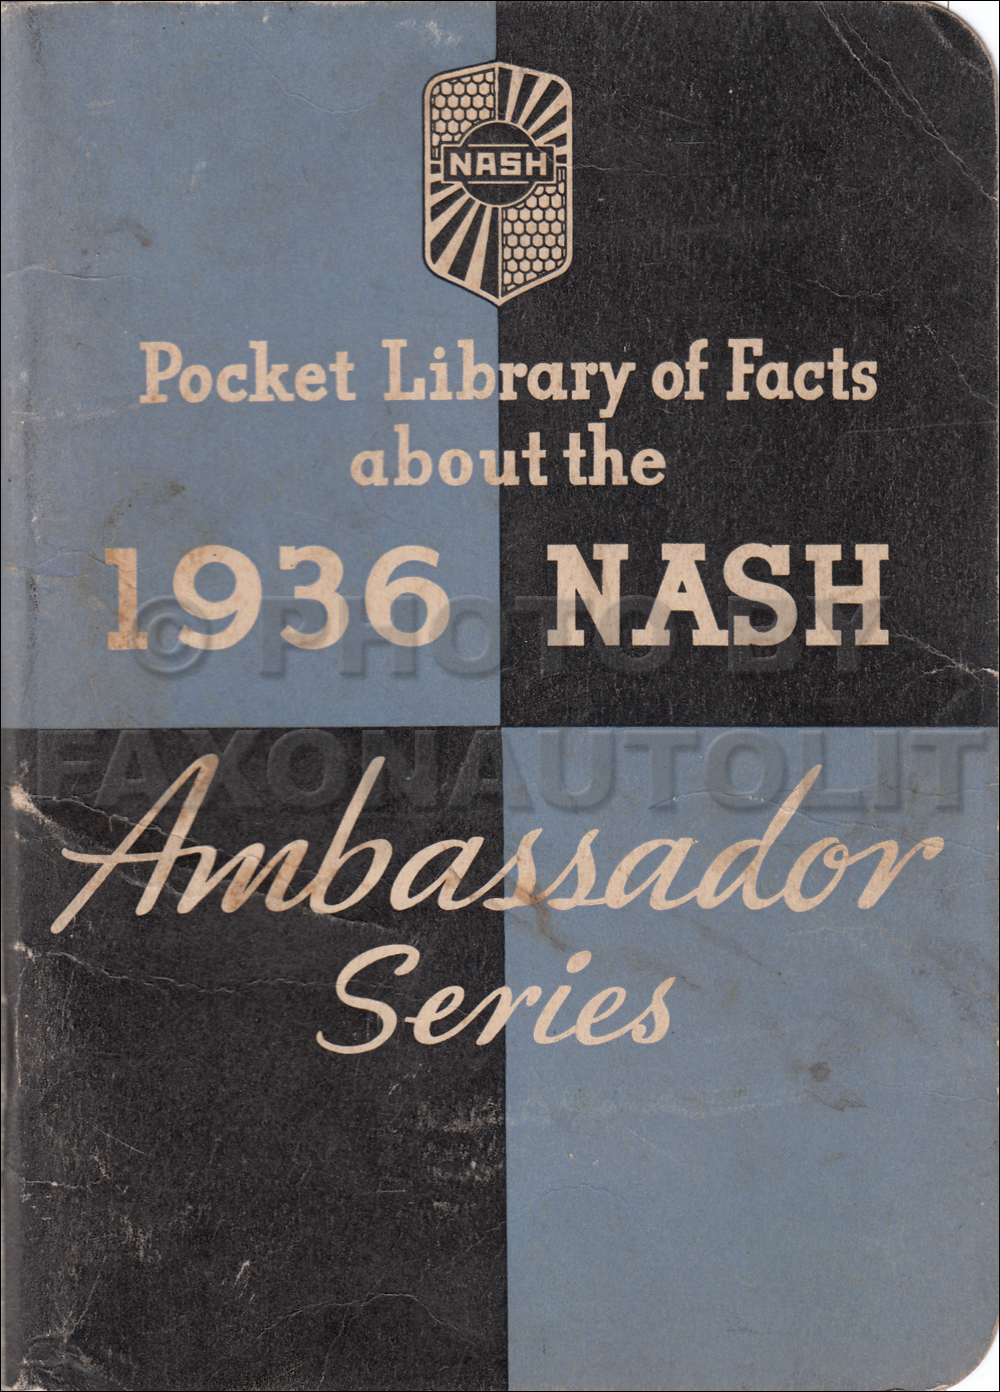 1936 Nash Ambassador Facts Book Original